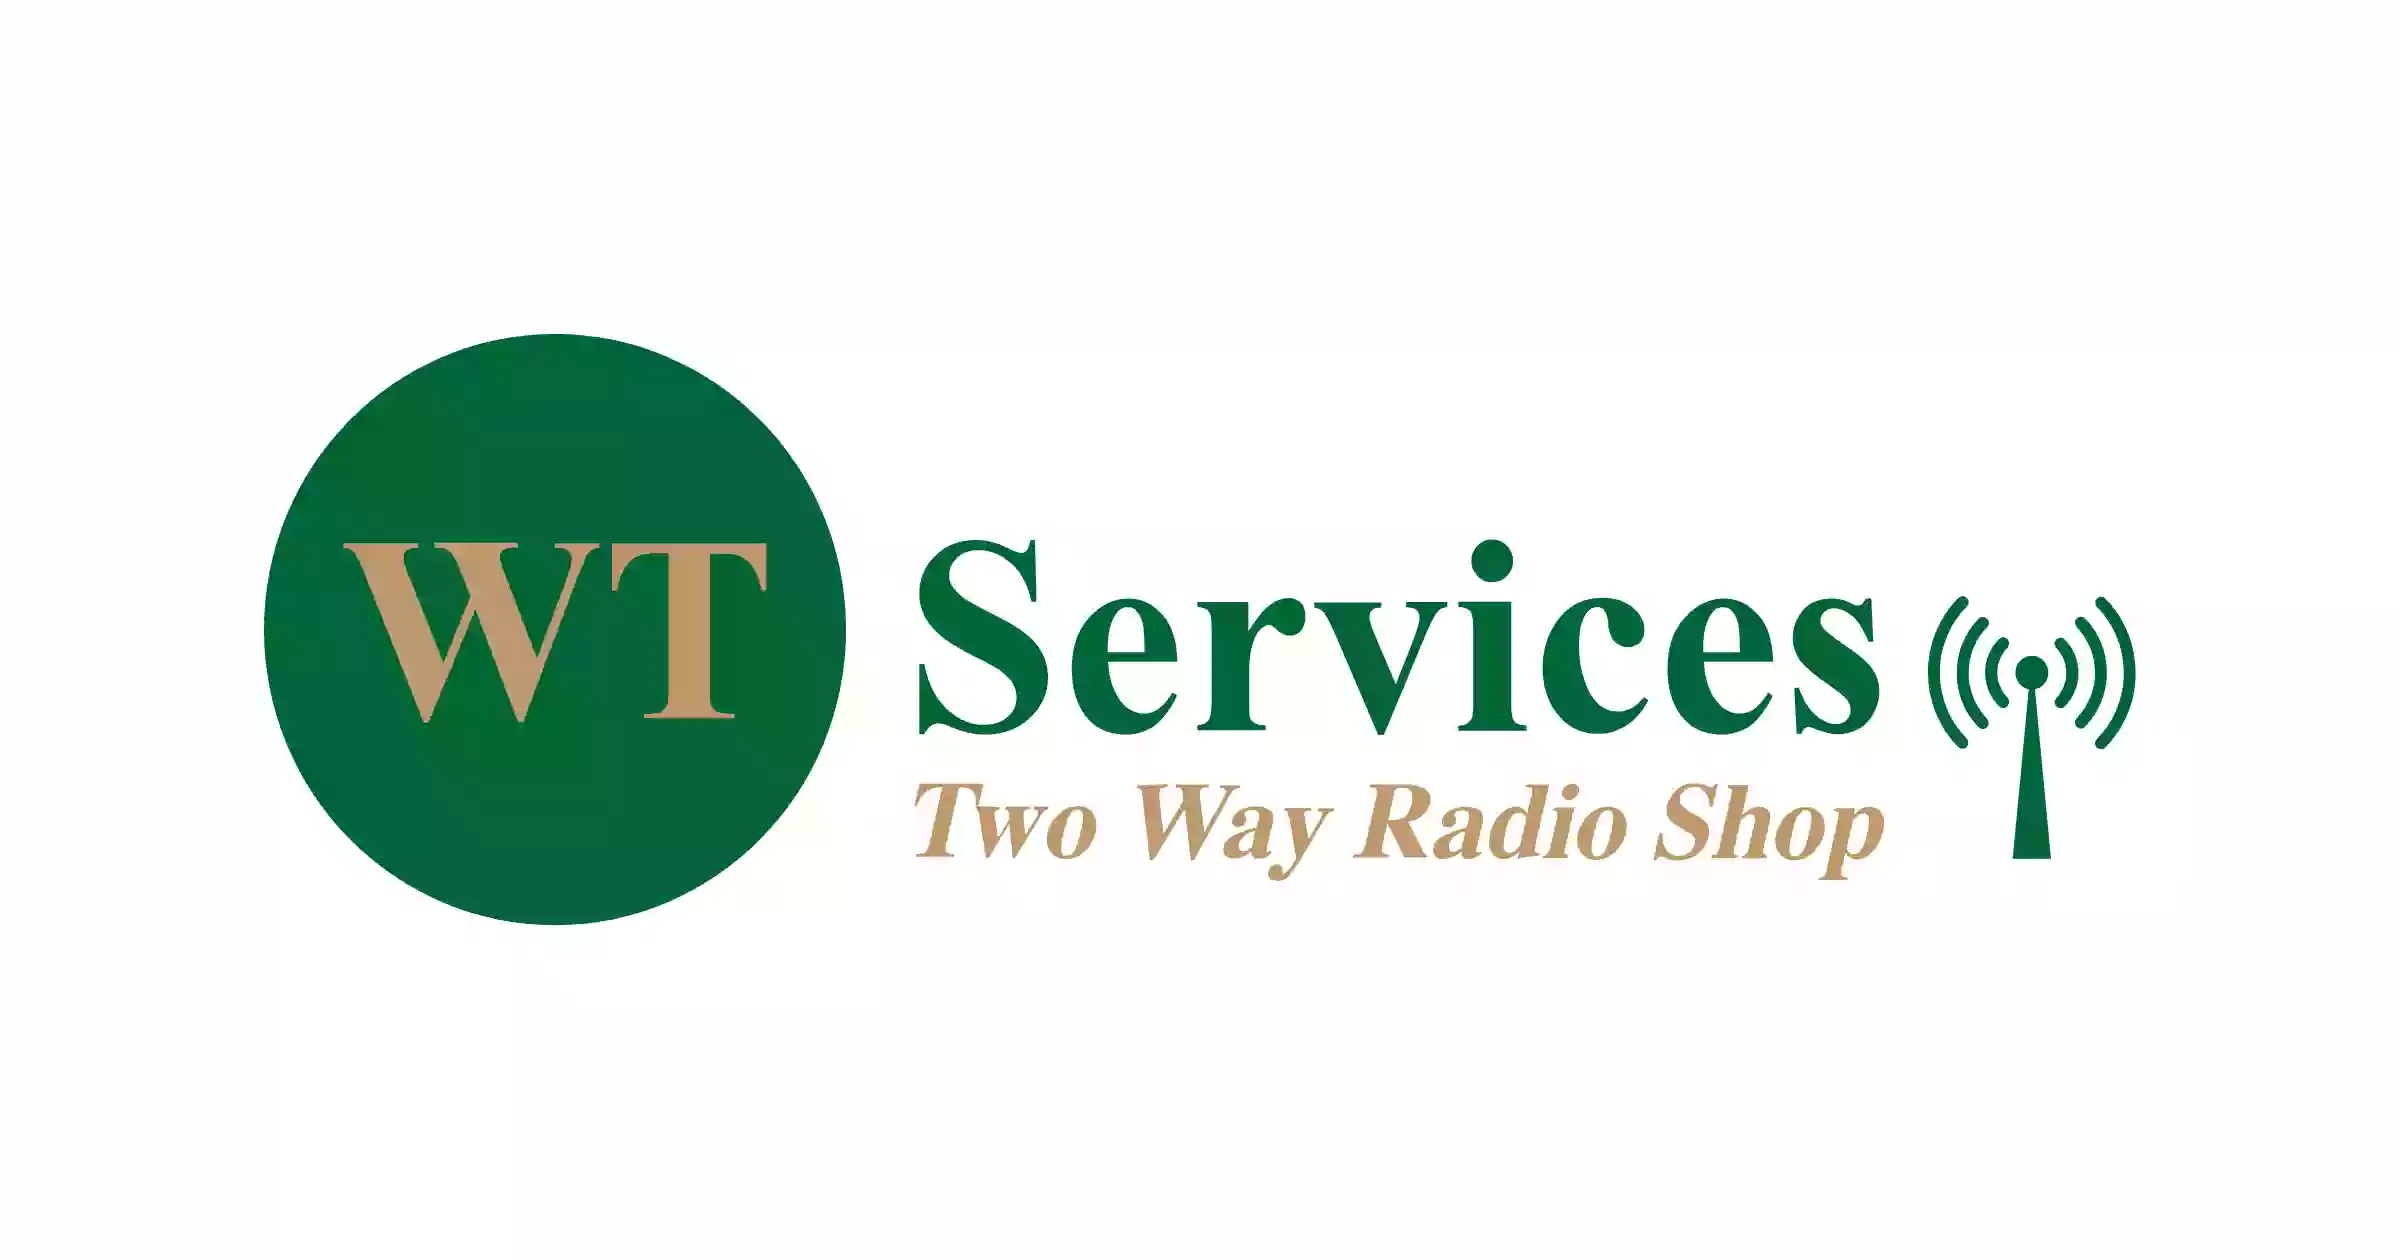 WT Services - Two Way Radio Shop